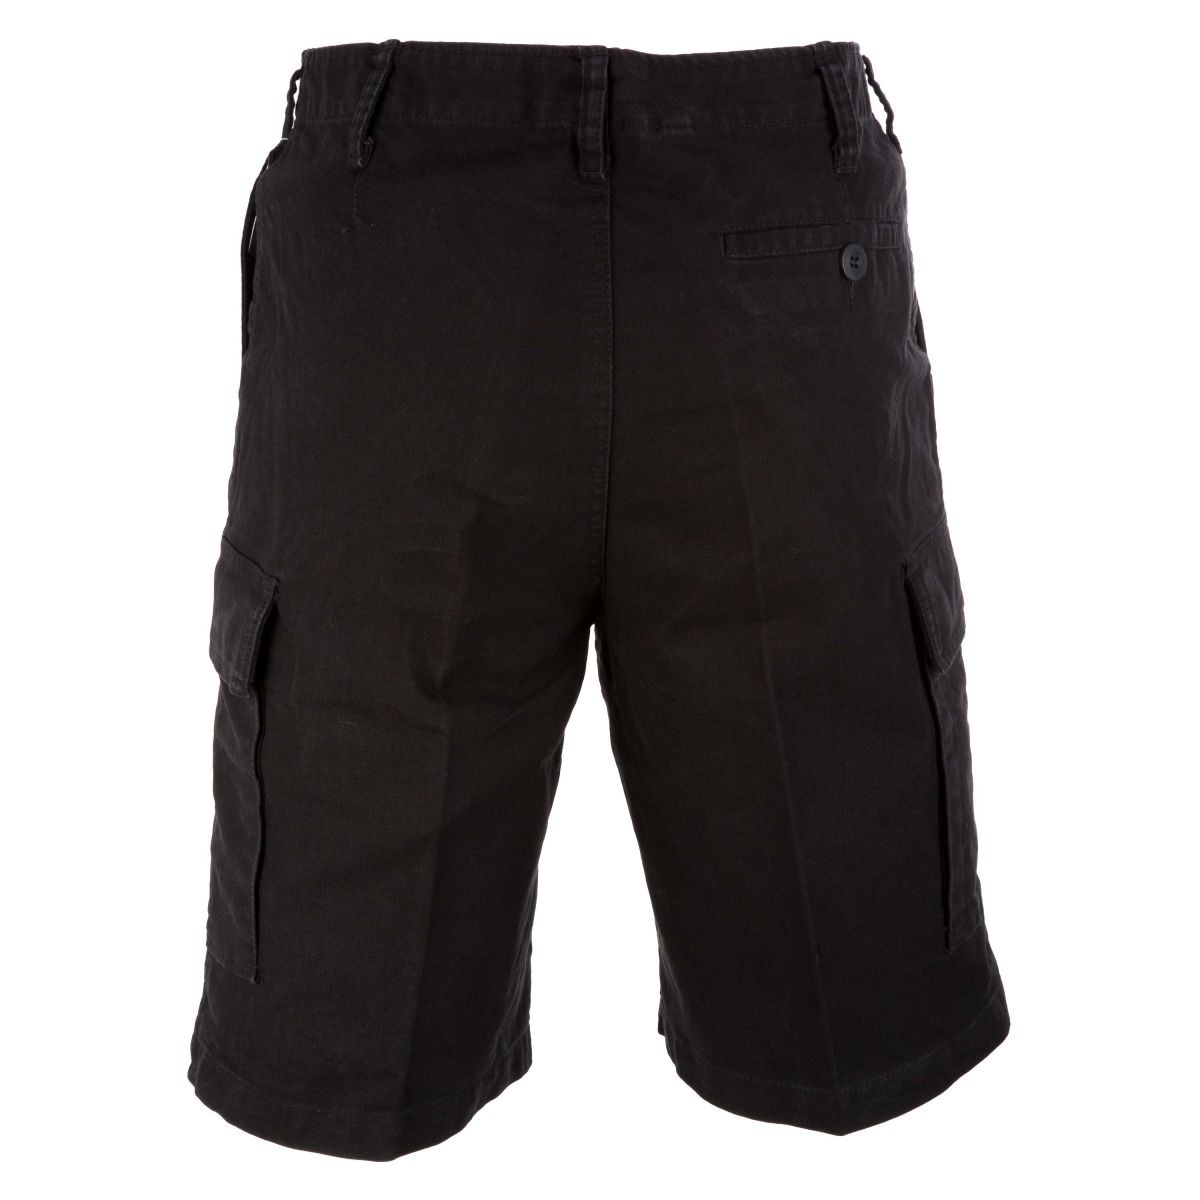 Purchase the Mil-Tec Moleskin Shorts black by ASMC